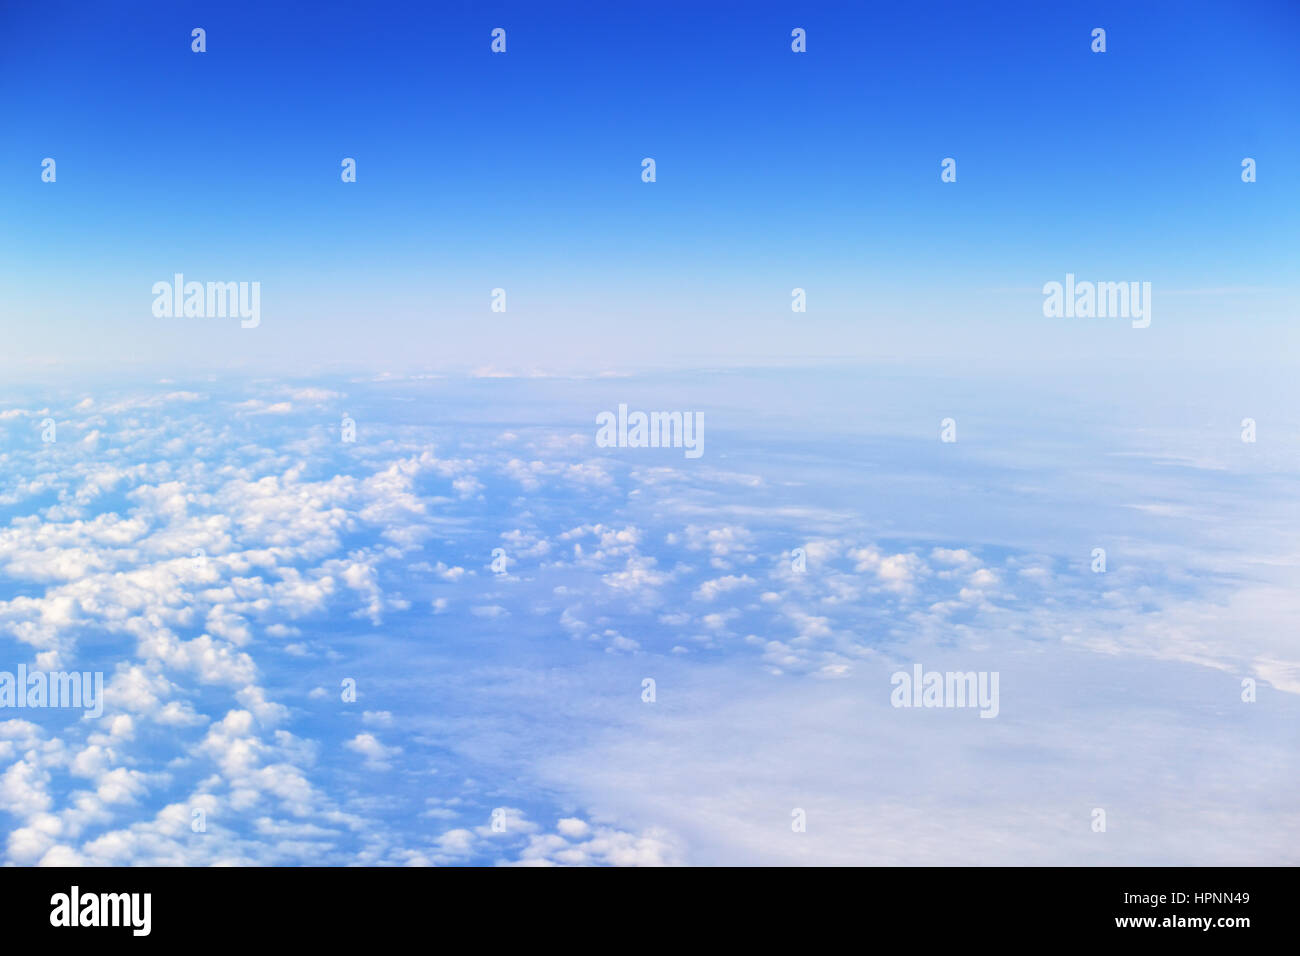 Blue sky abov nuvole bianche appaiono come neve Foto Stock